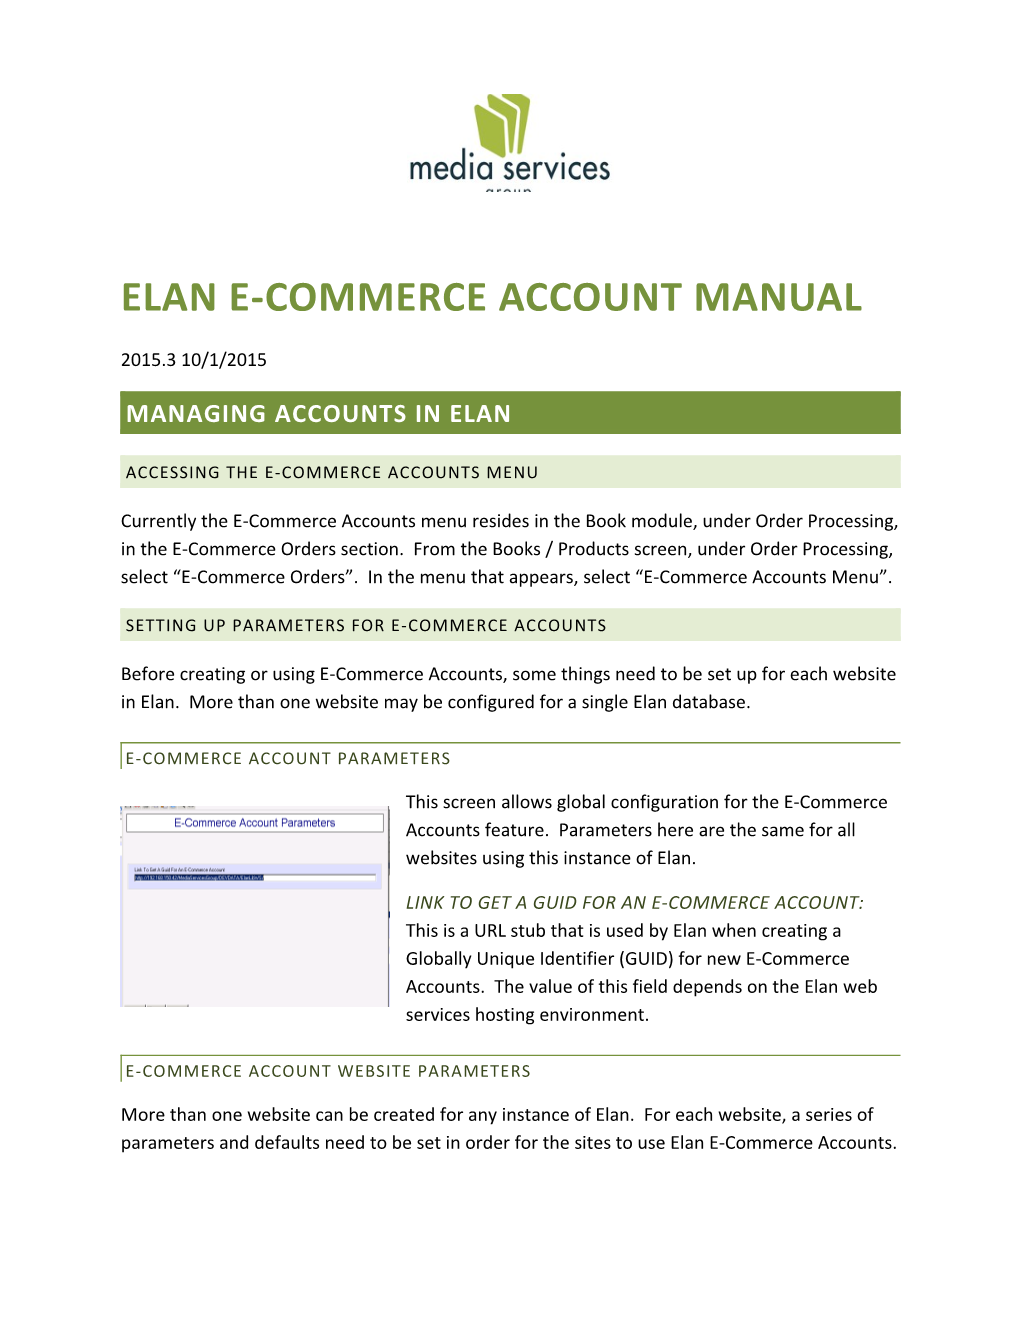 Elan E-Commerce Account Manual